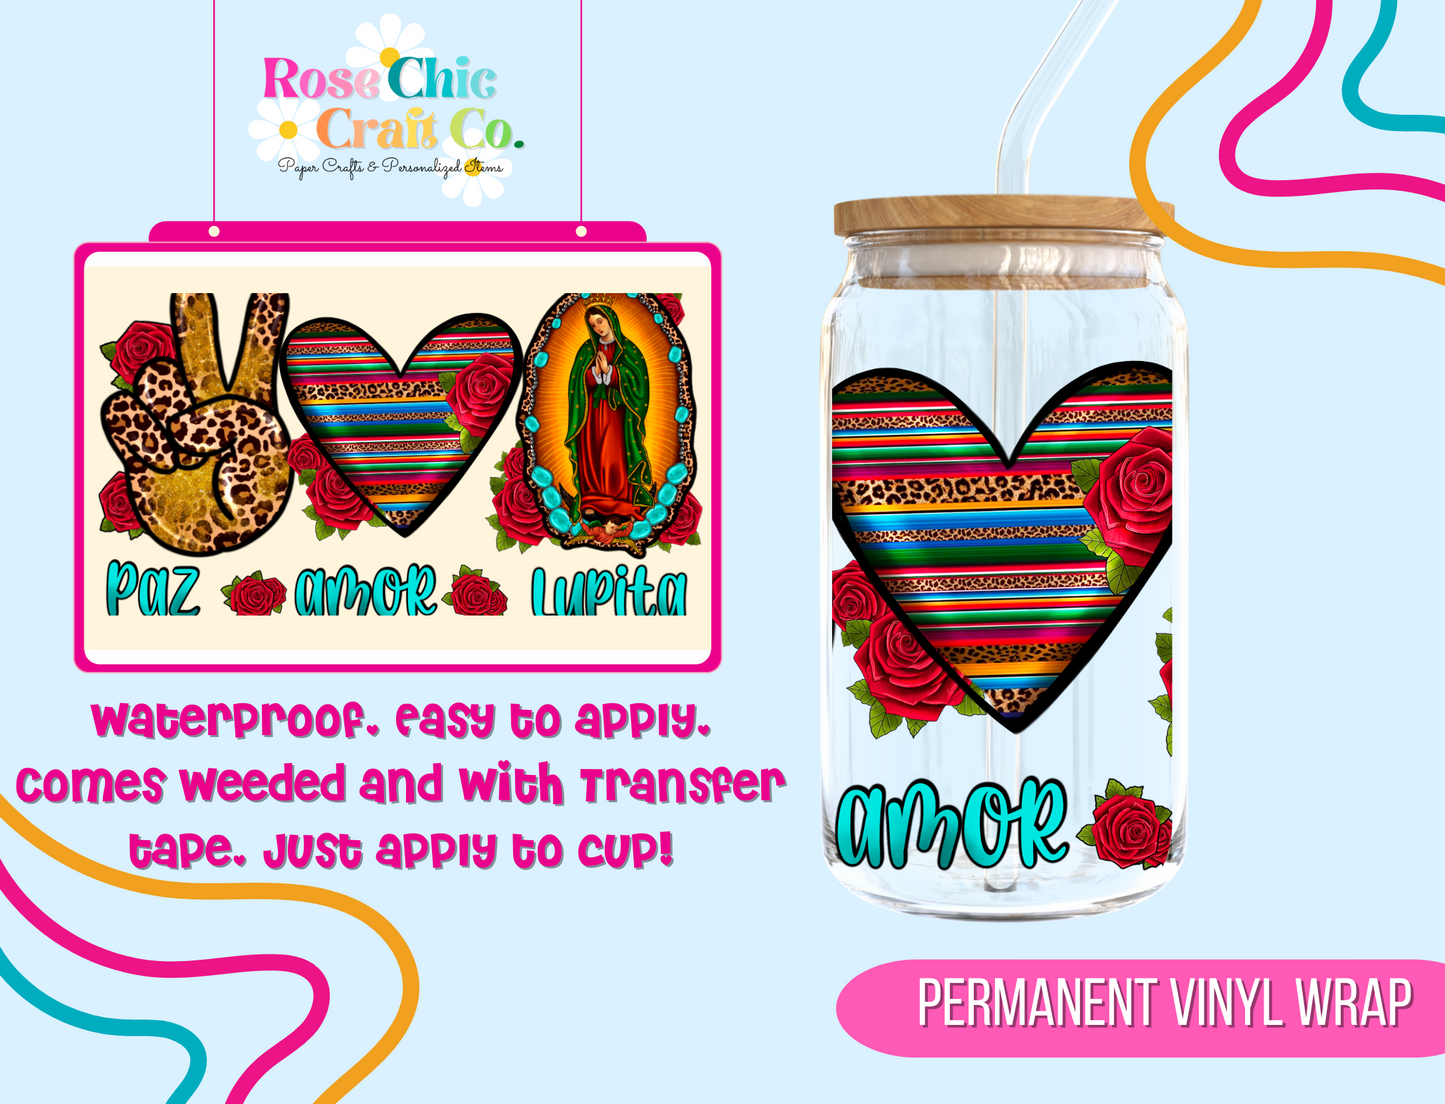 Permanent Vinyl Wrap 16 oz- paz amor Lupita